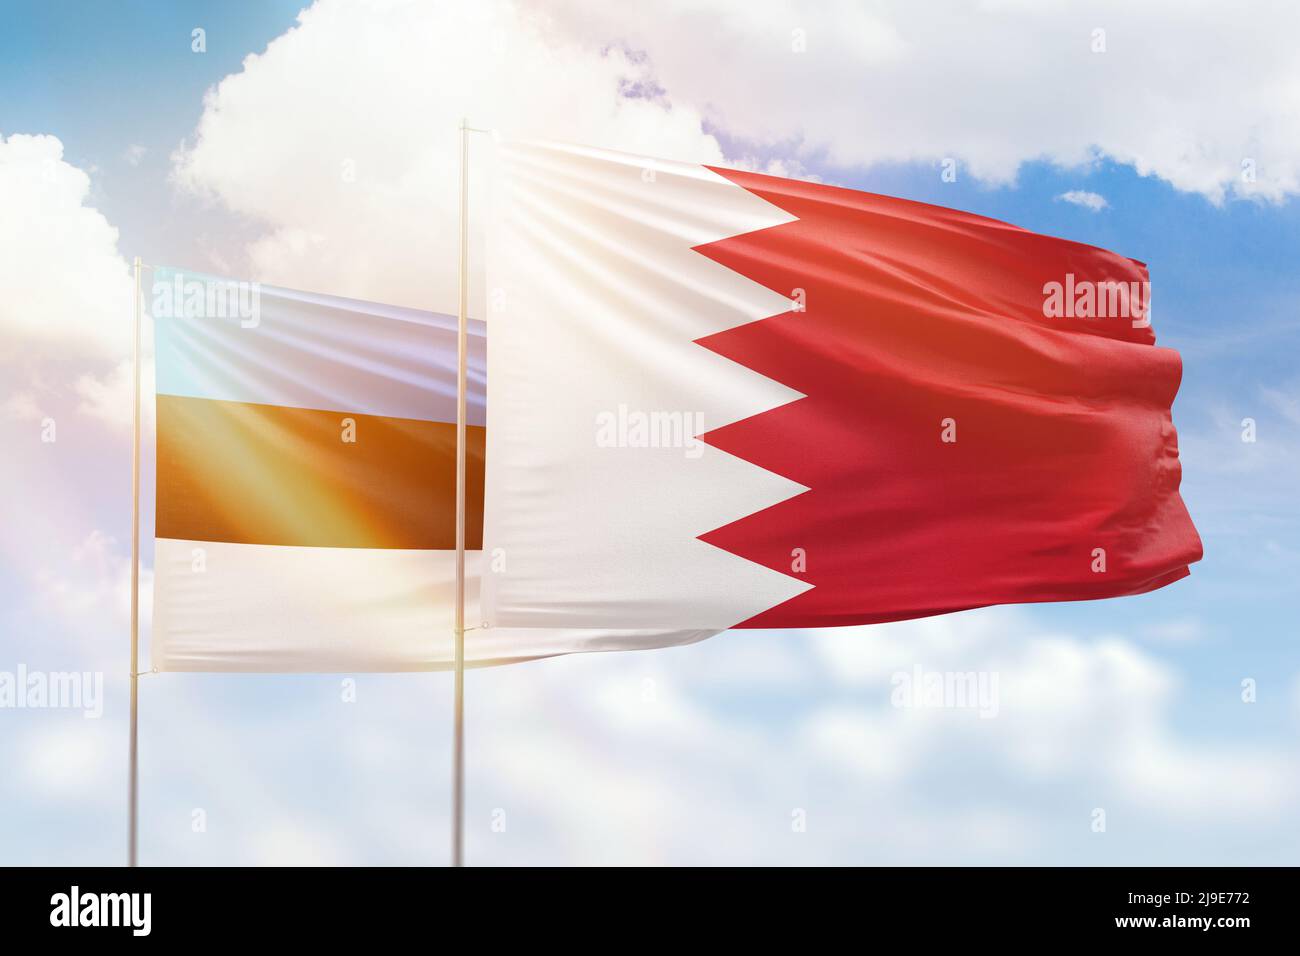 Sunny blue sky and flags of bahrain and estonia Stock Photo